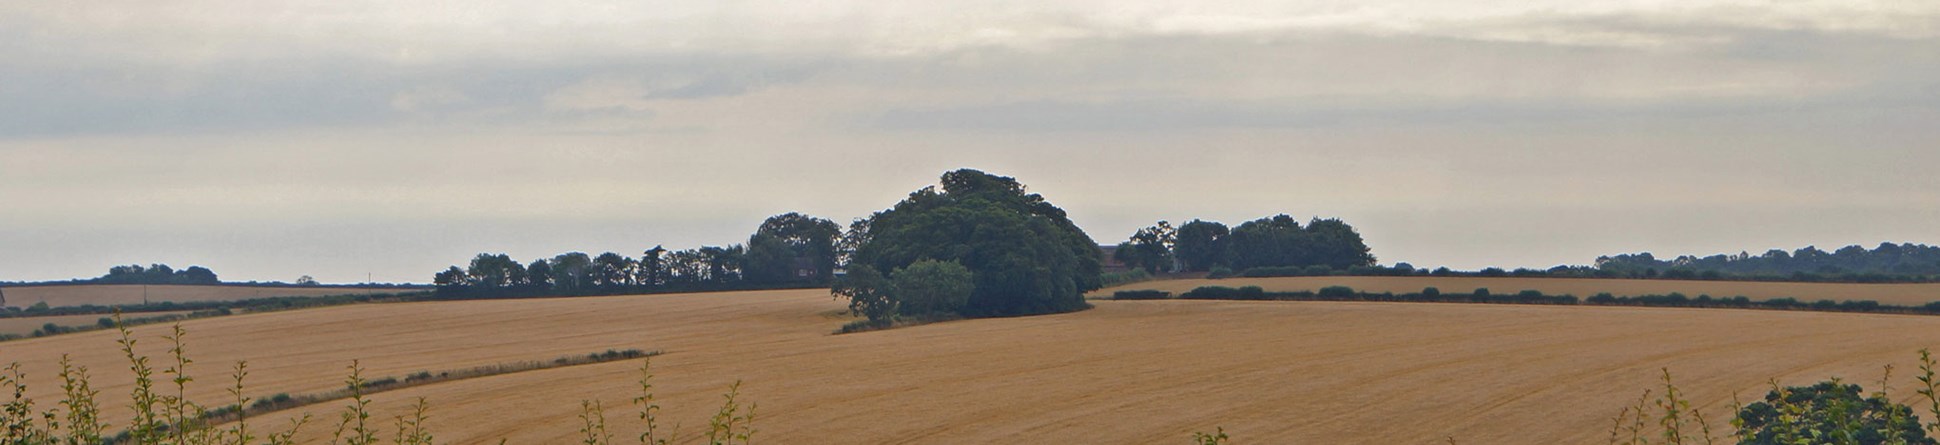 View across fields to a tree-grown barrow.